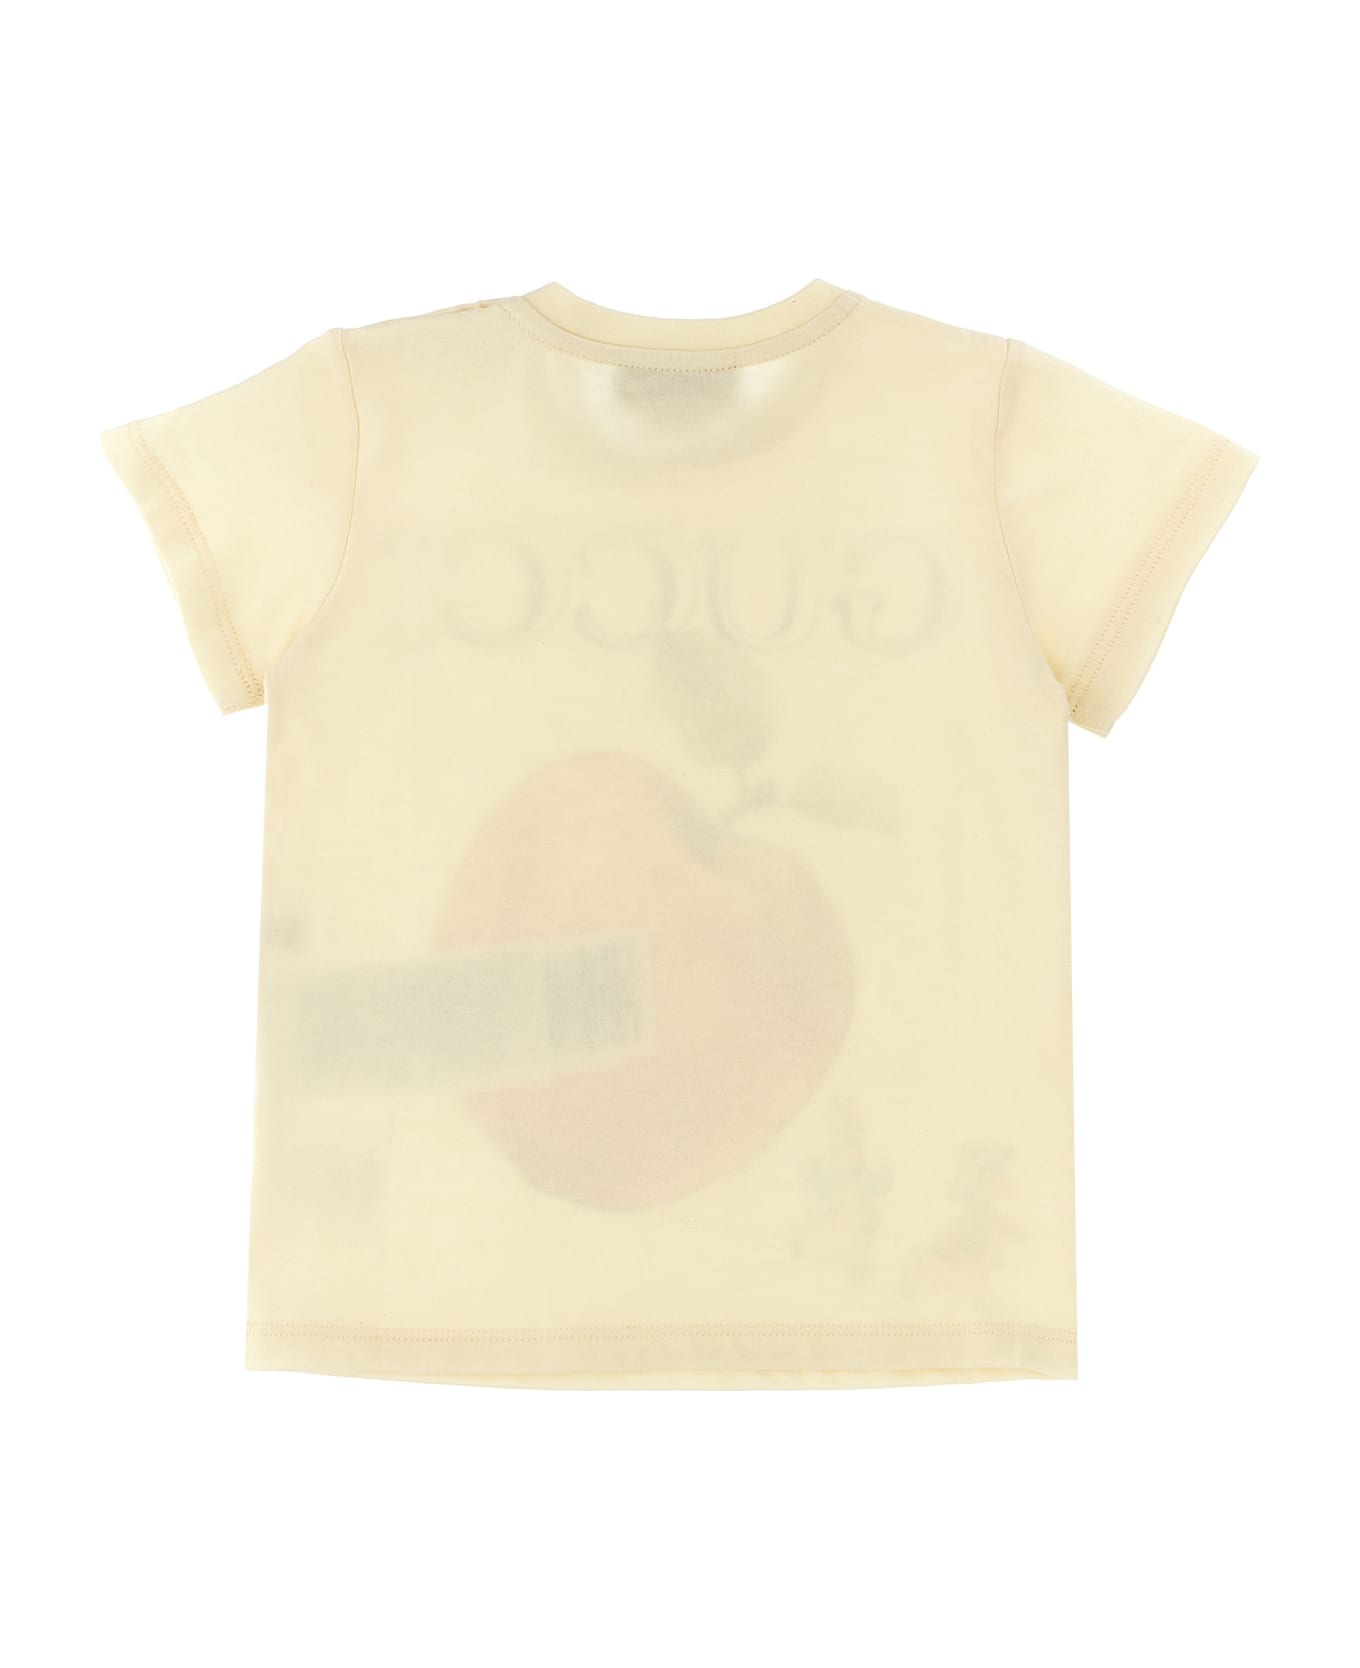 Gucci Printed T-shirt Peter Rabbit X Gucci - Beige Tシャツ＆ポロシャツ